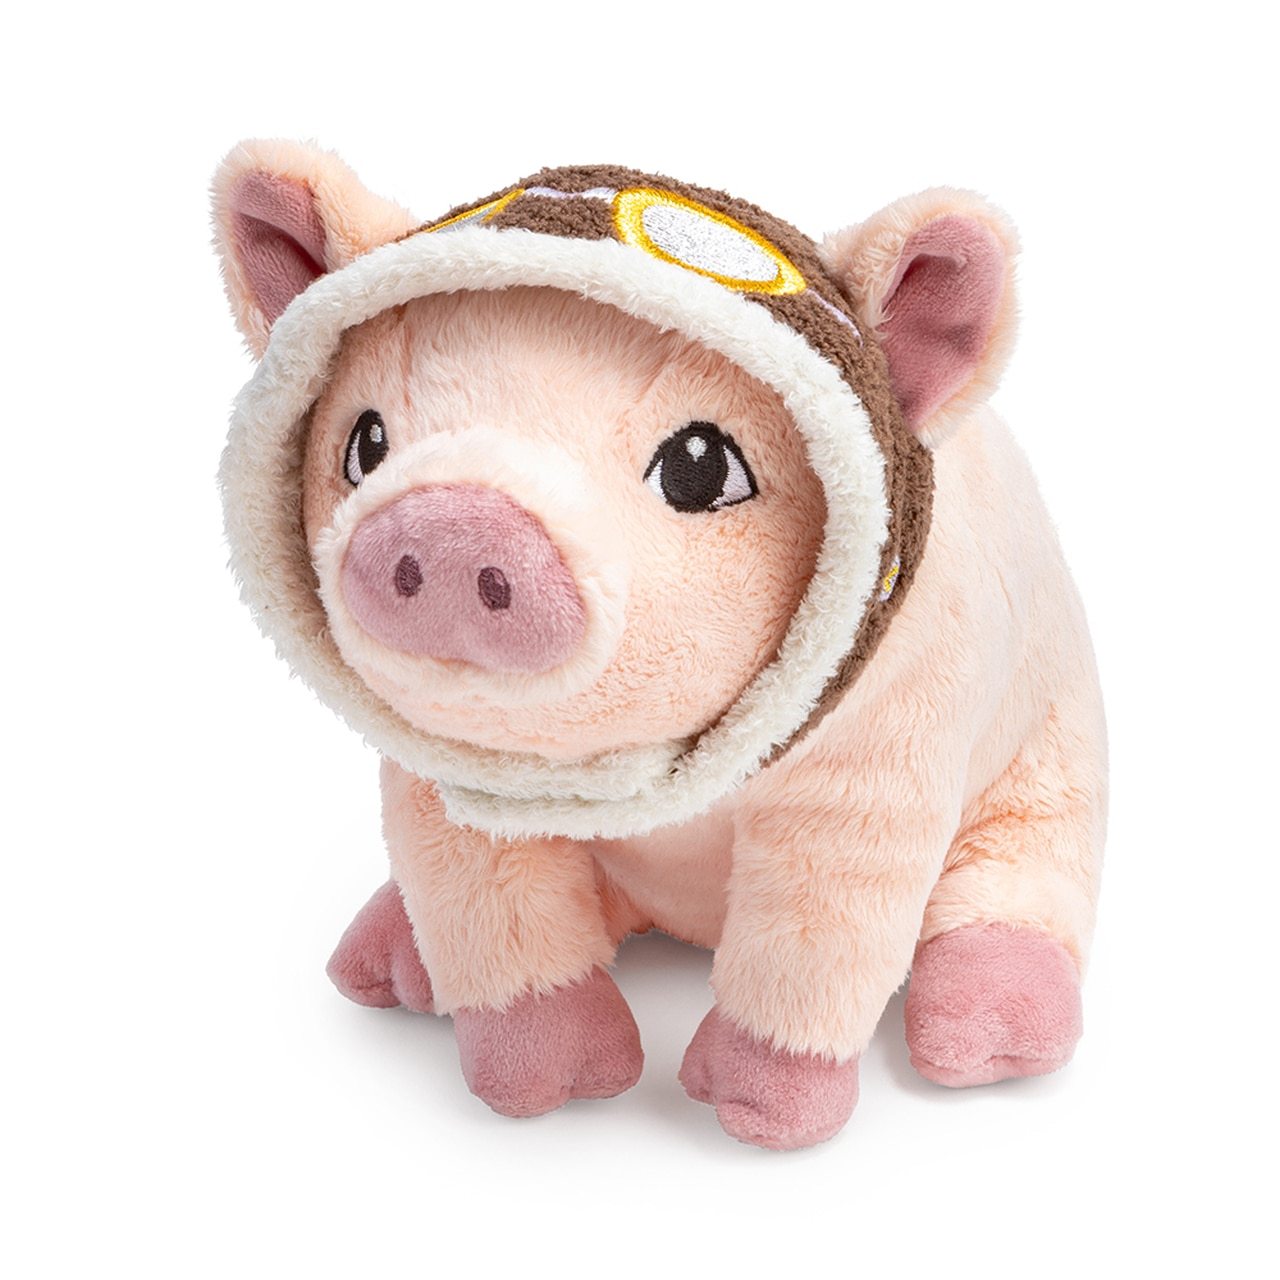 A plush pig wearing plush aviator's goggles